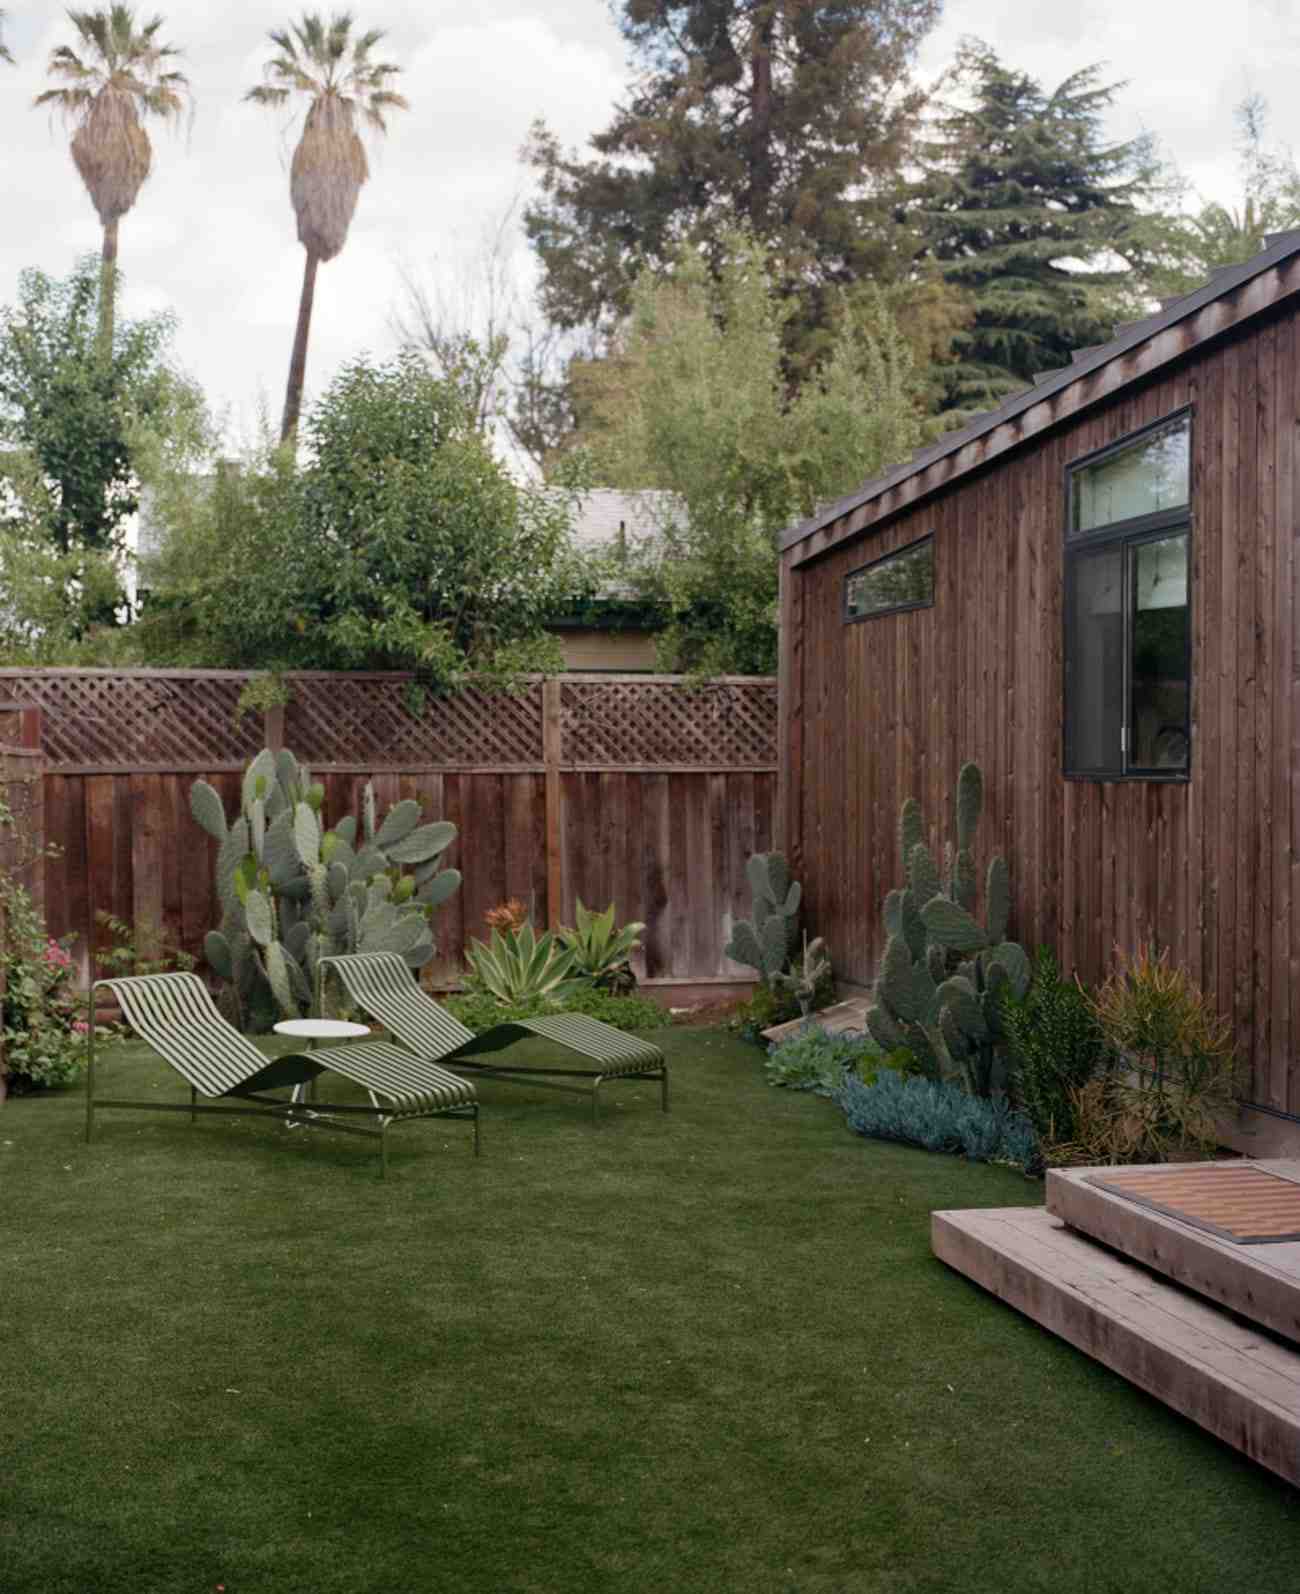 An Abodu One ADU cedar siding casita sitting in a California backyard with minimalist furniture and an assortment of Western cacti plants.